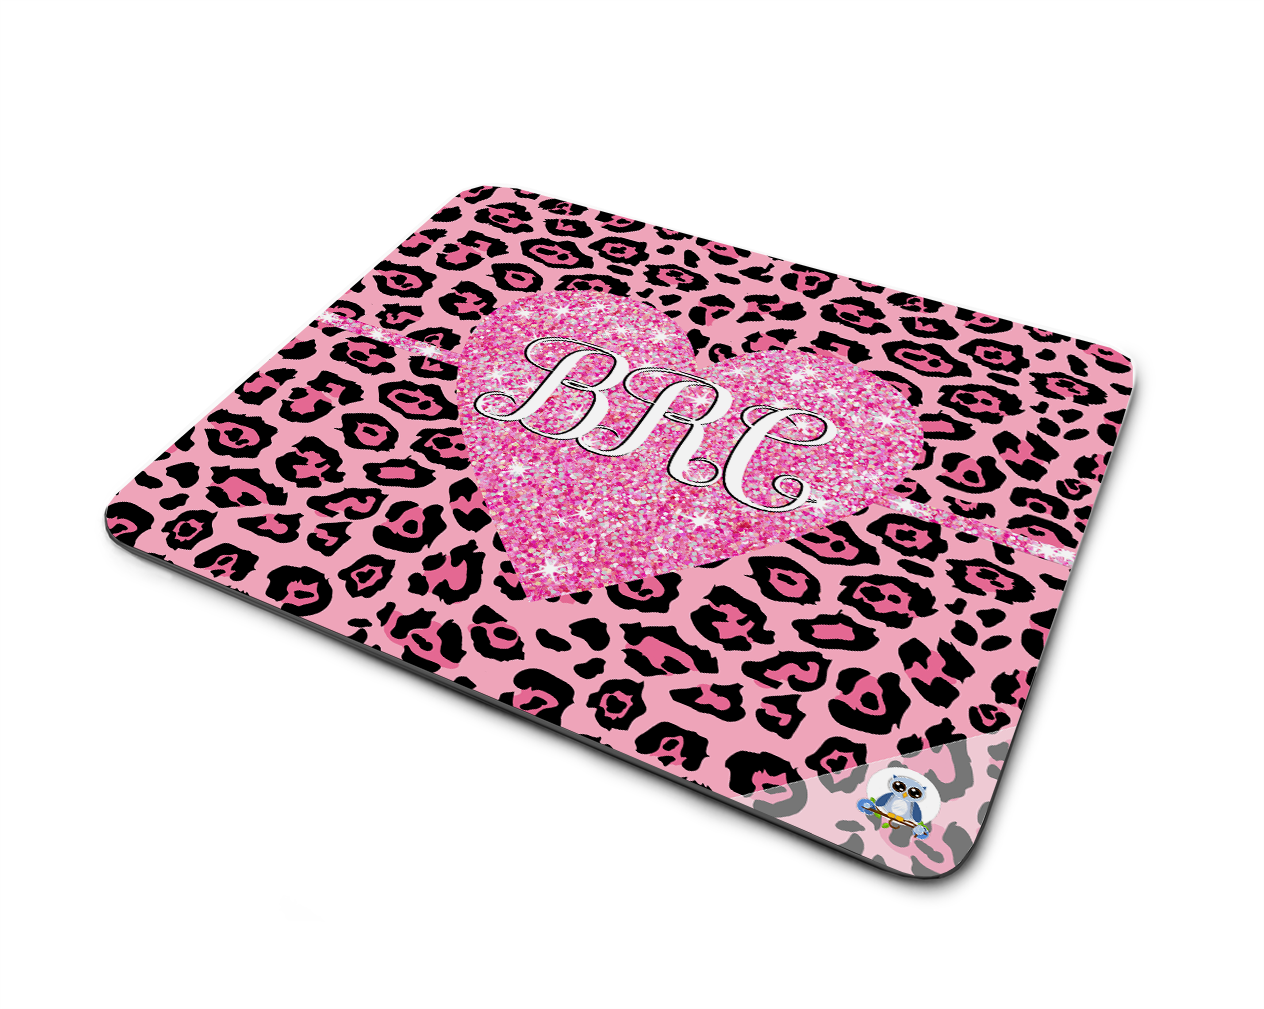 Custom Desk Mouse Pad Pink Leopard Print With Monogram